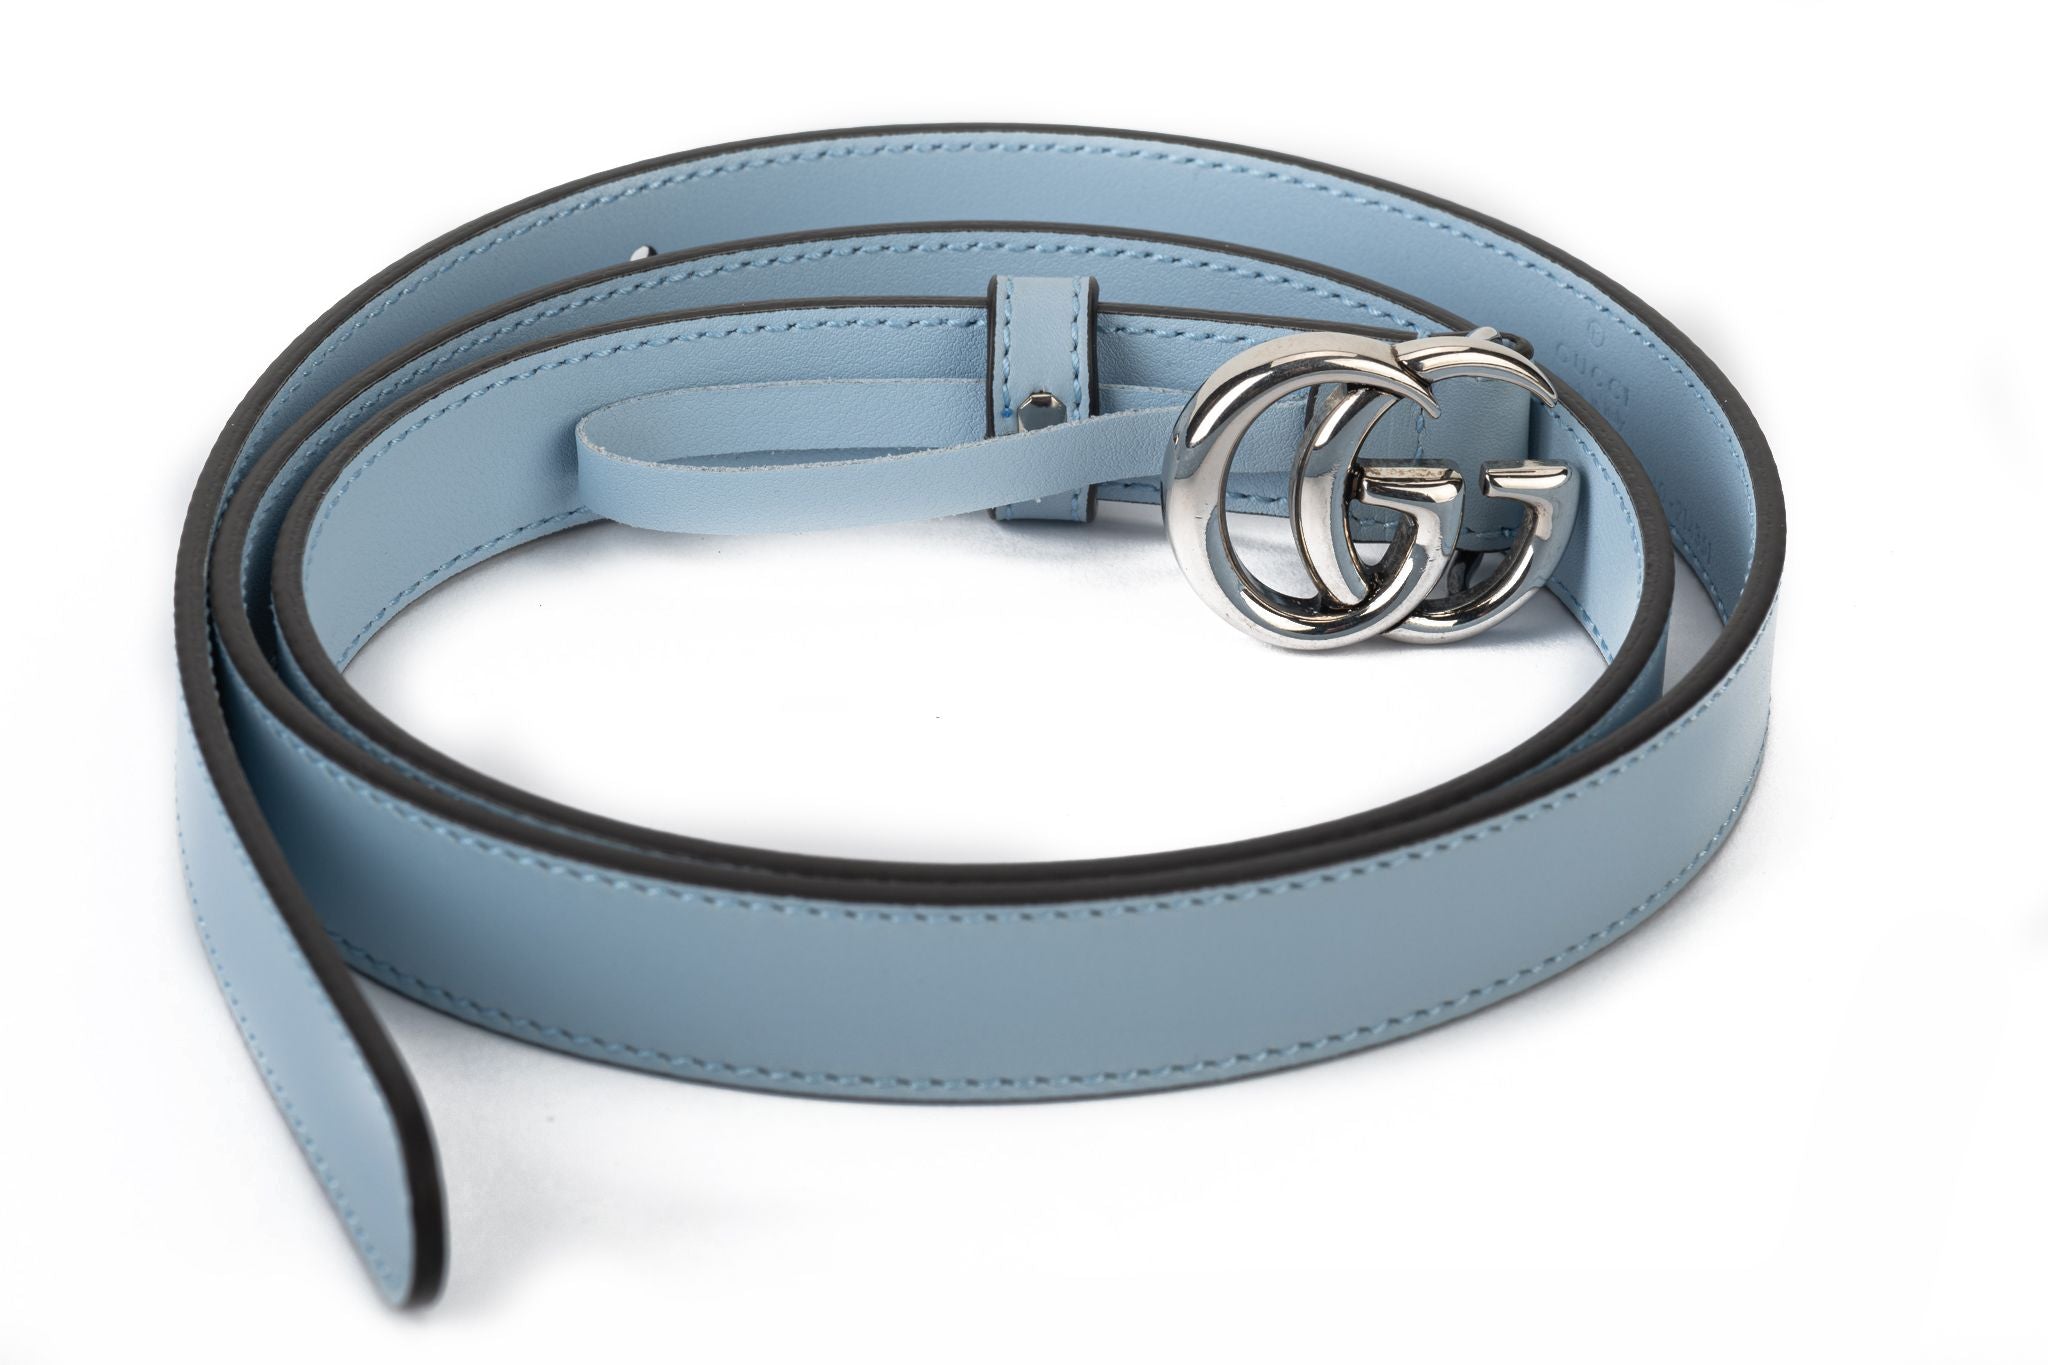 Blue Gucci Leather Belt